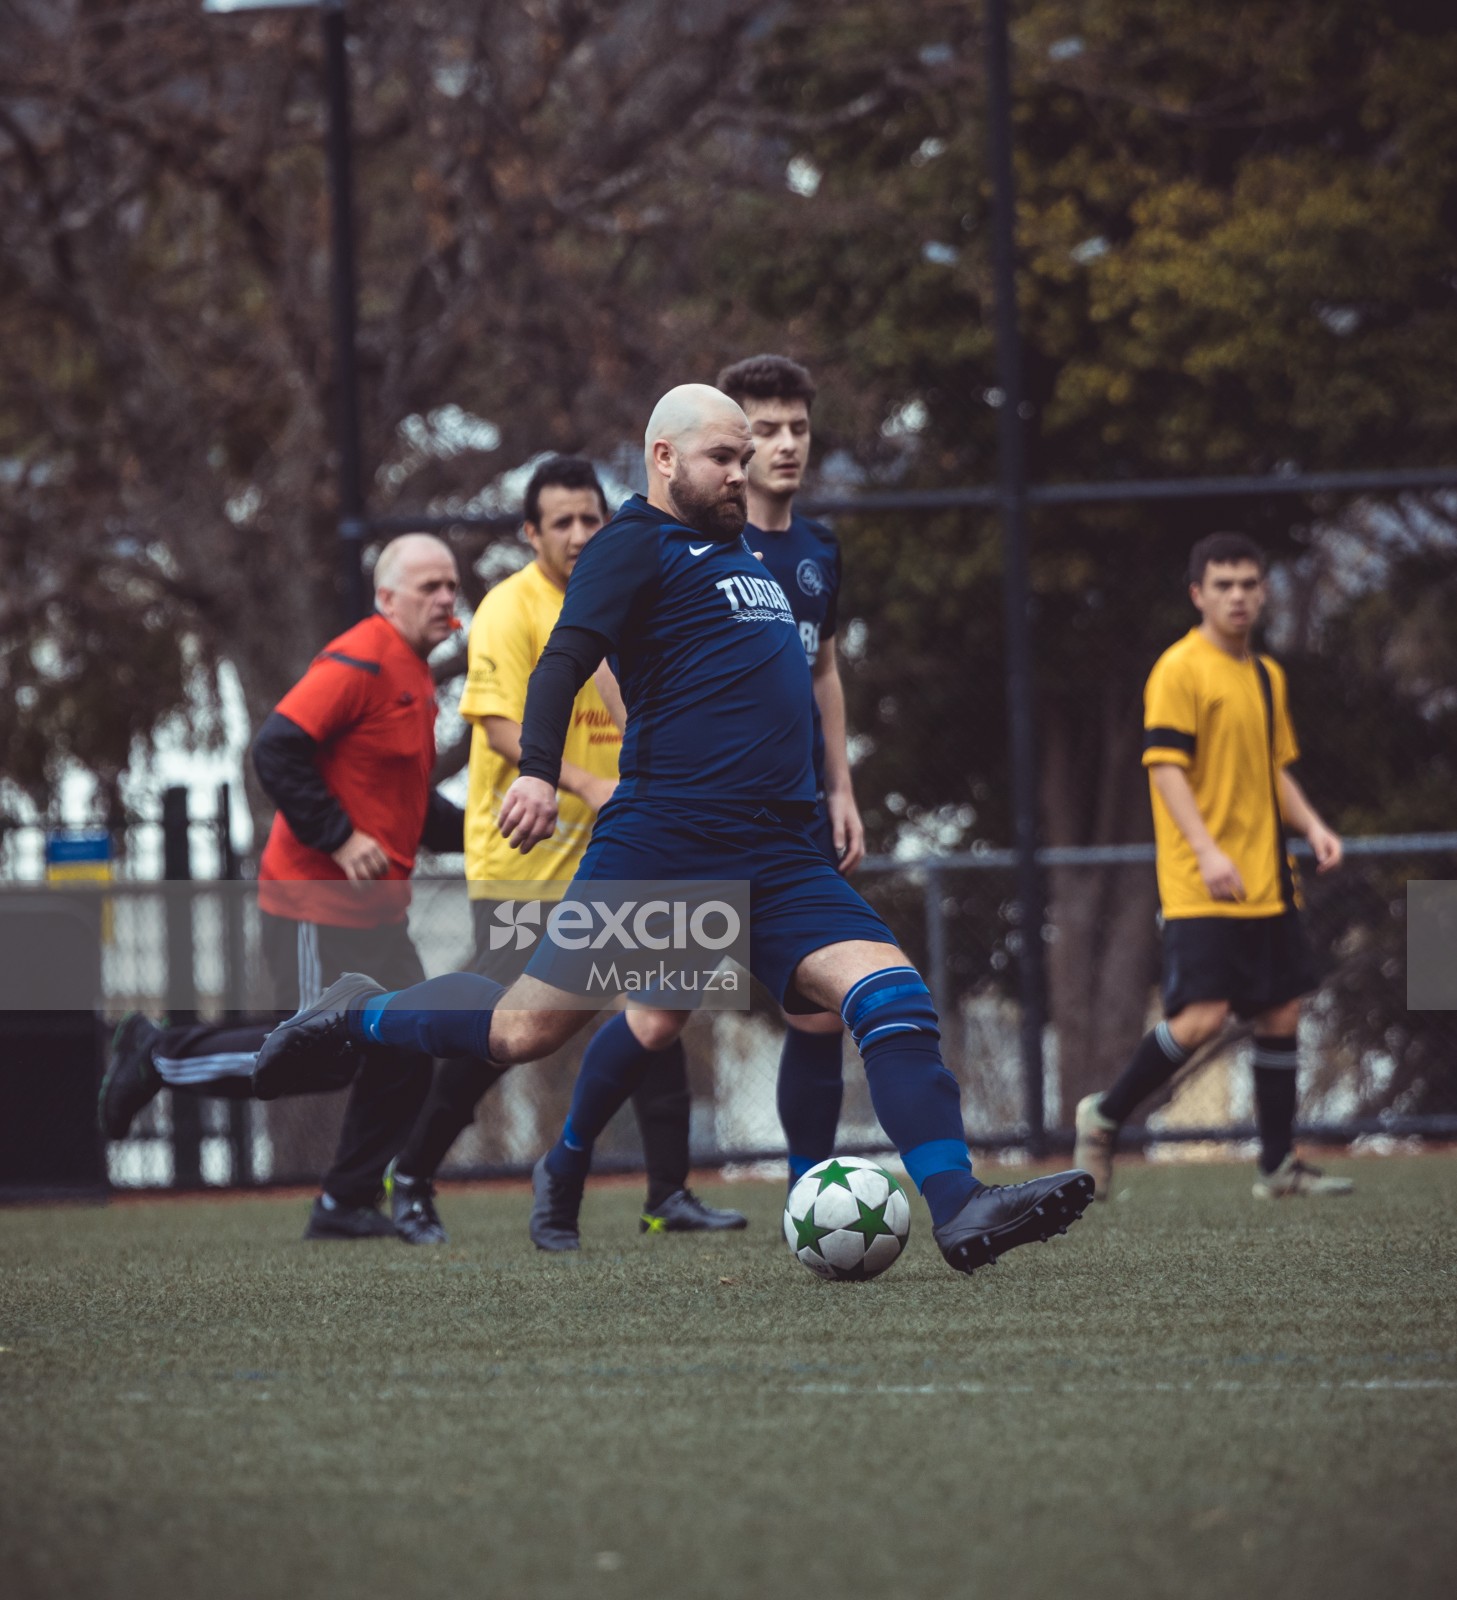 Bald and bearded football player in blue kit kicks ball - Sports Zone sunday league